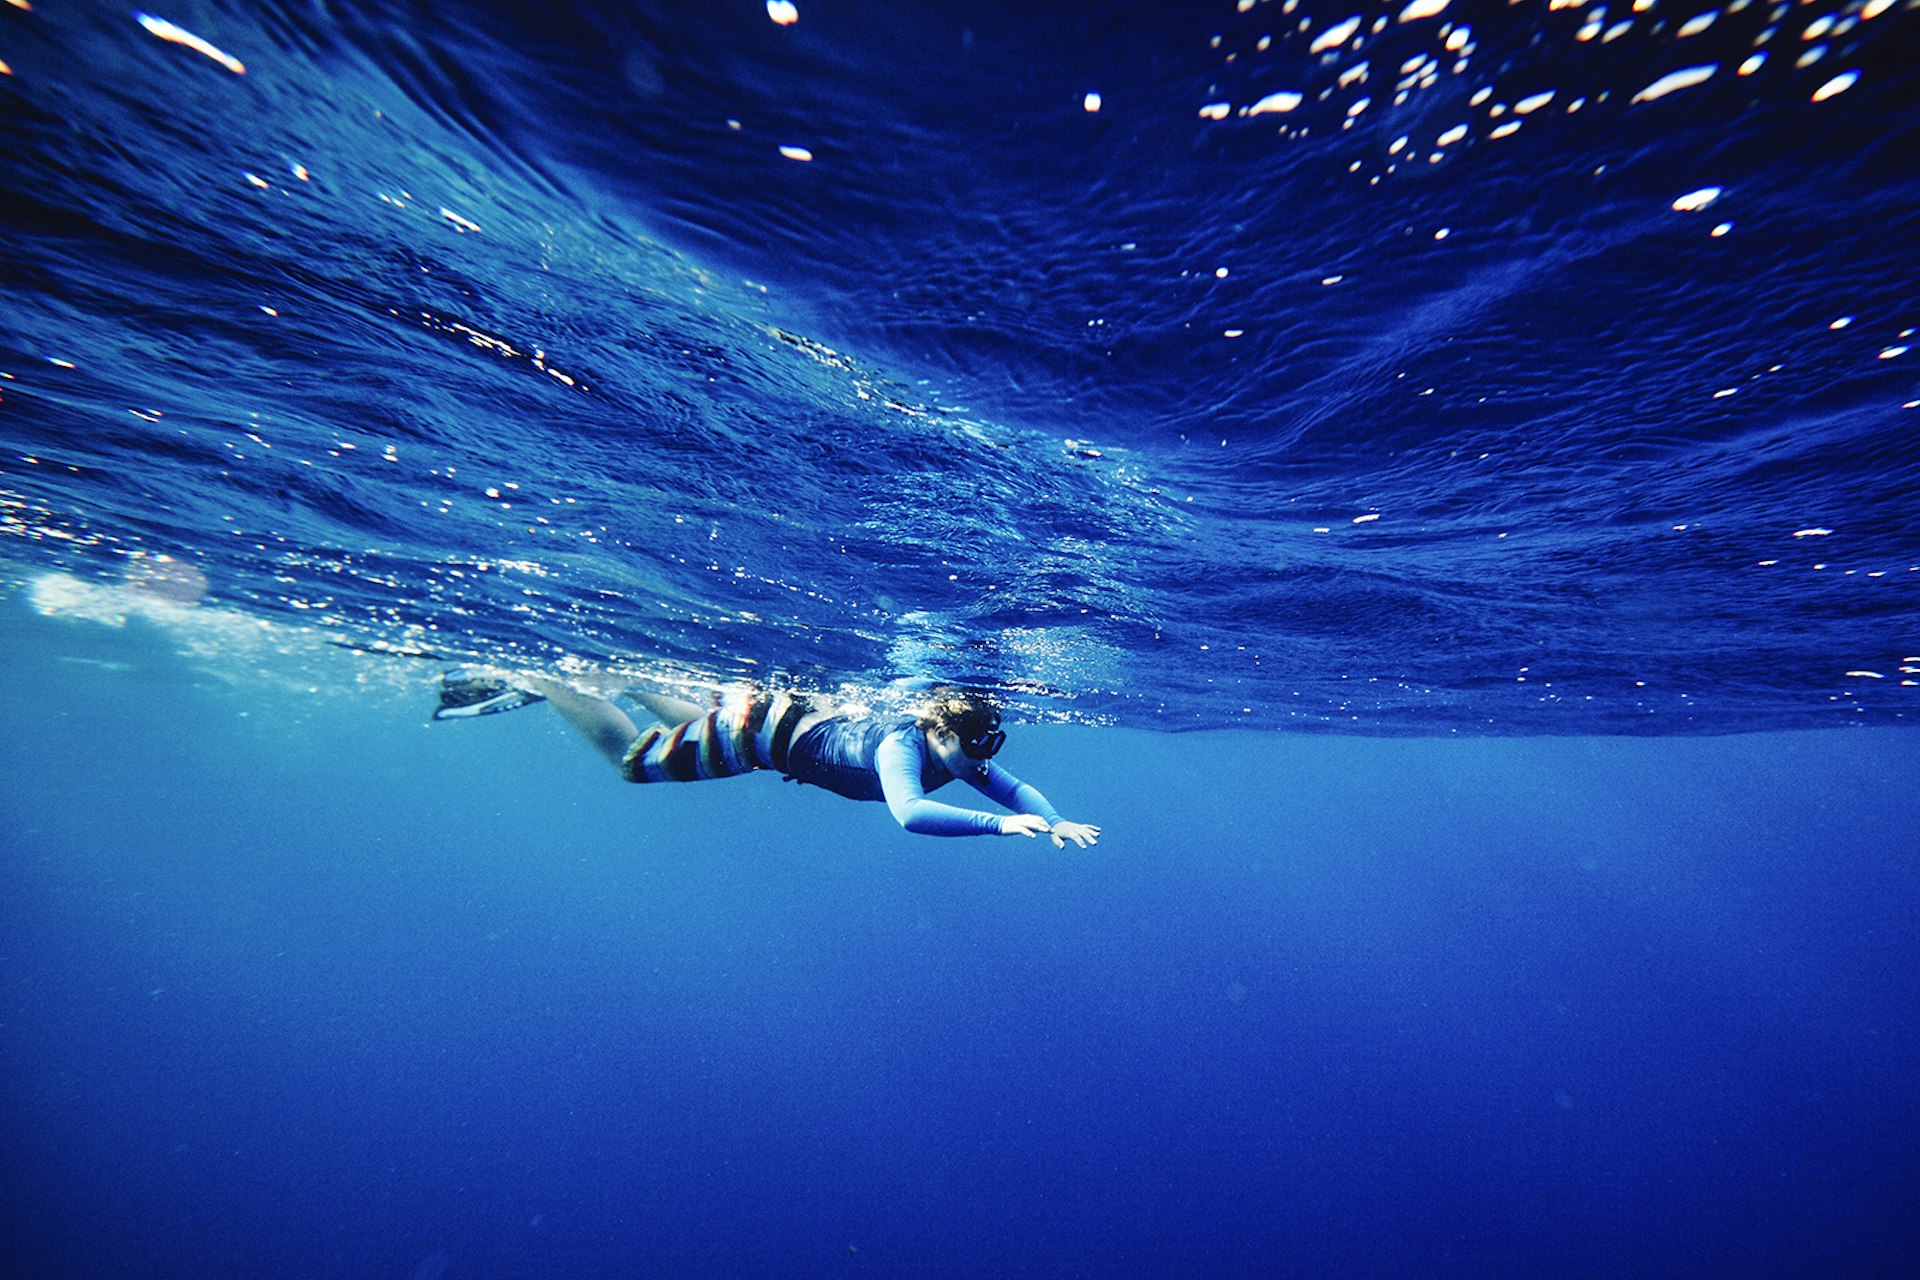 Features - Young boy snorkeling in open water underwater view